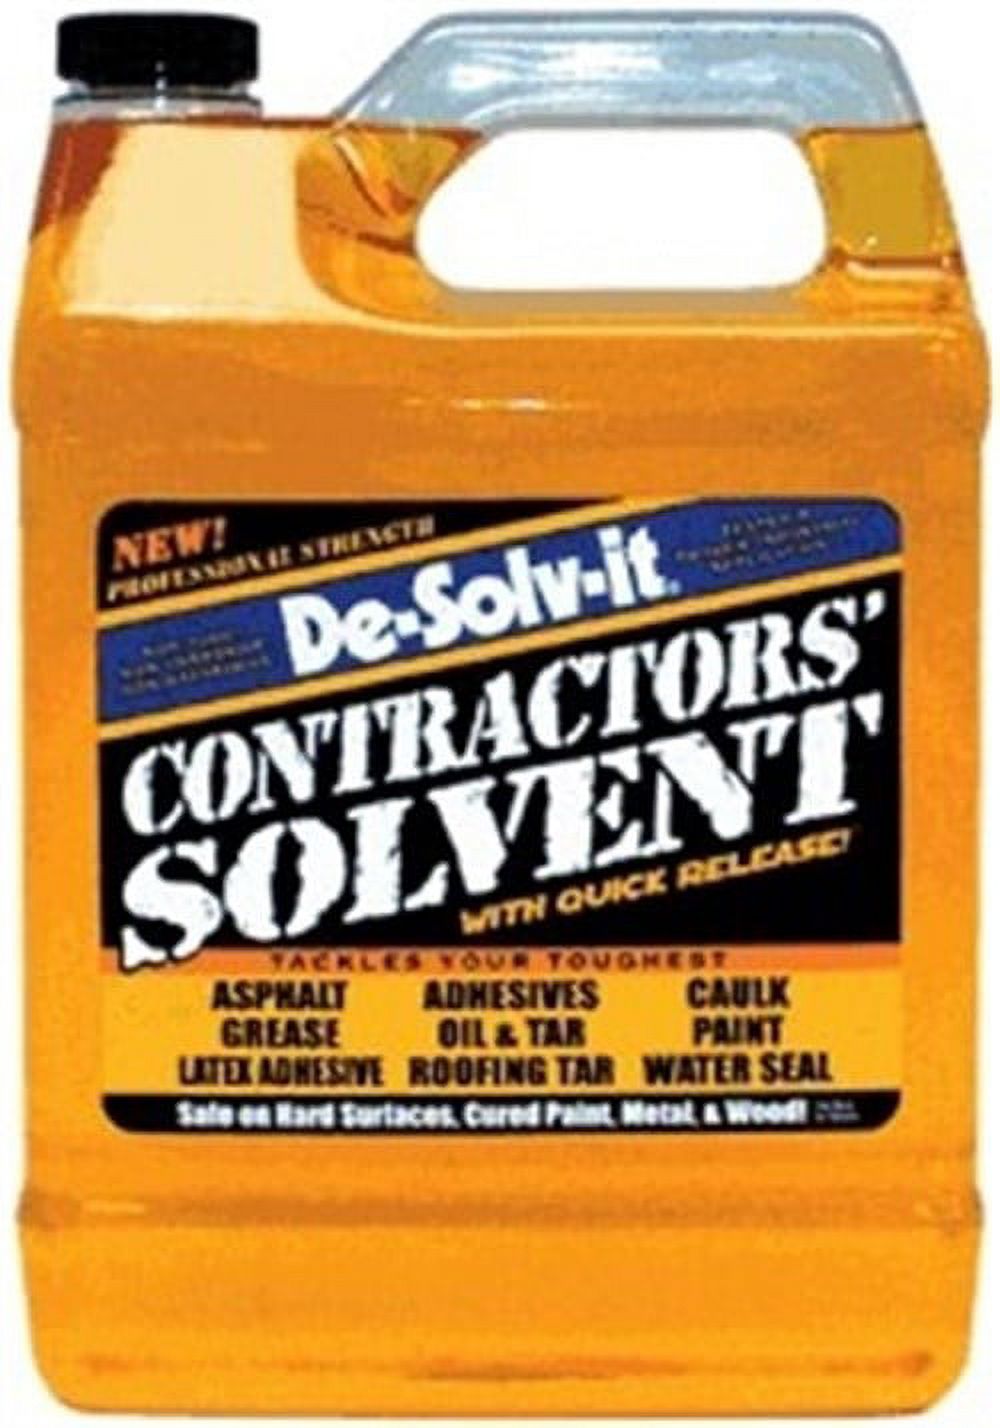 De-solv-it Pro Contractors Solvent 1 Gallon Refill - image 2 of 3